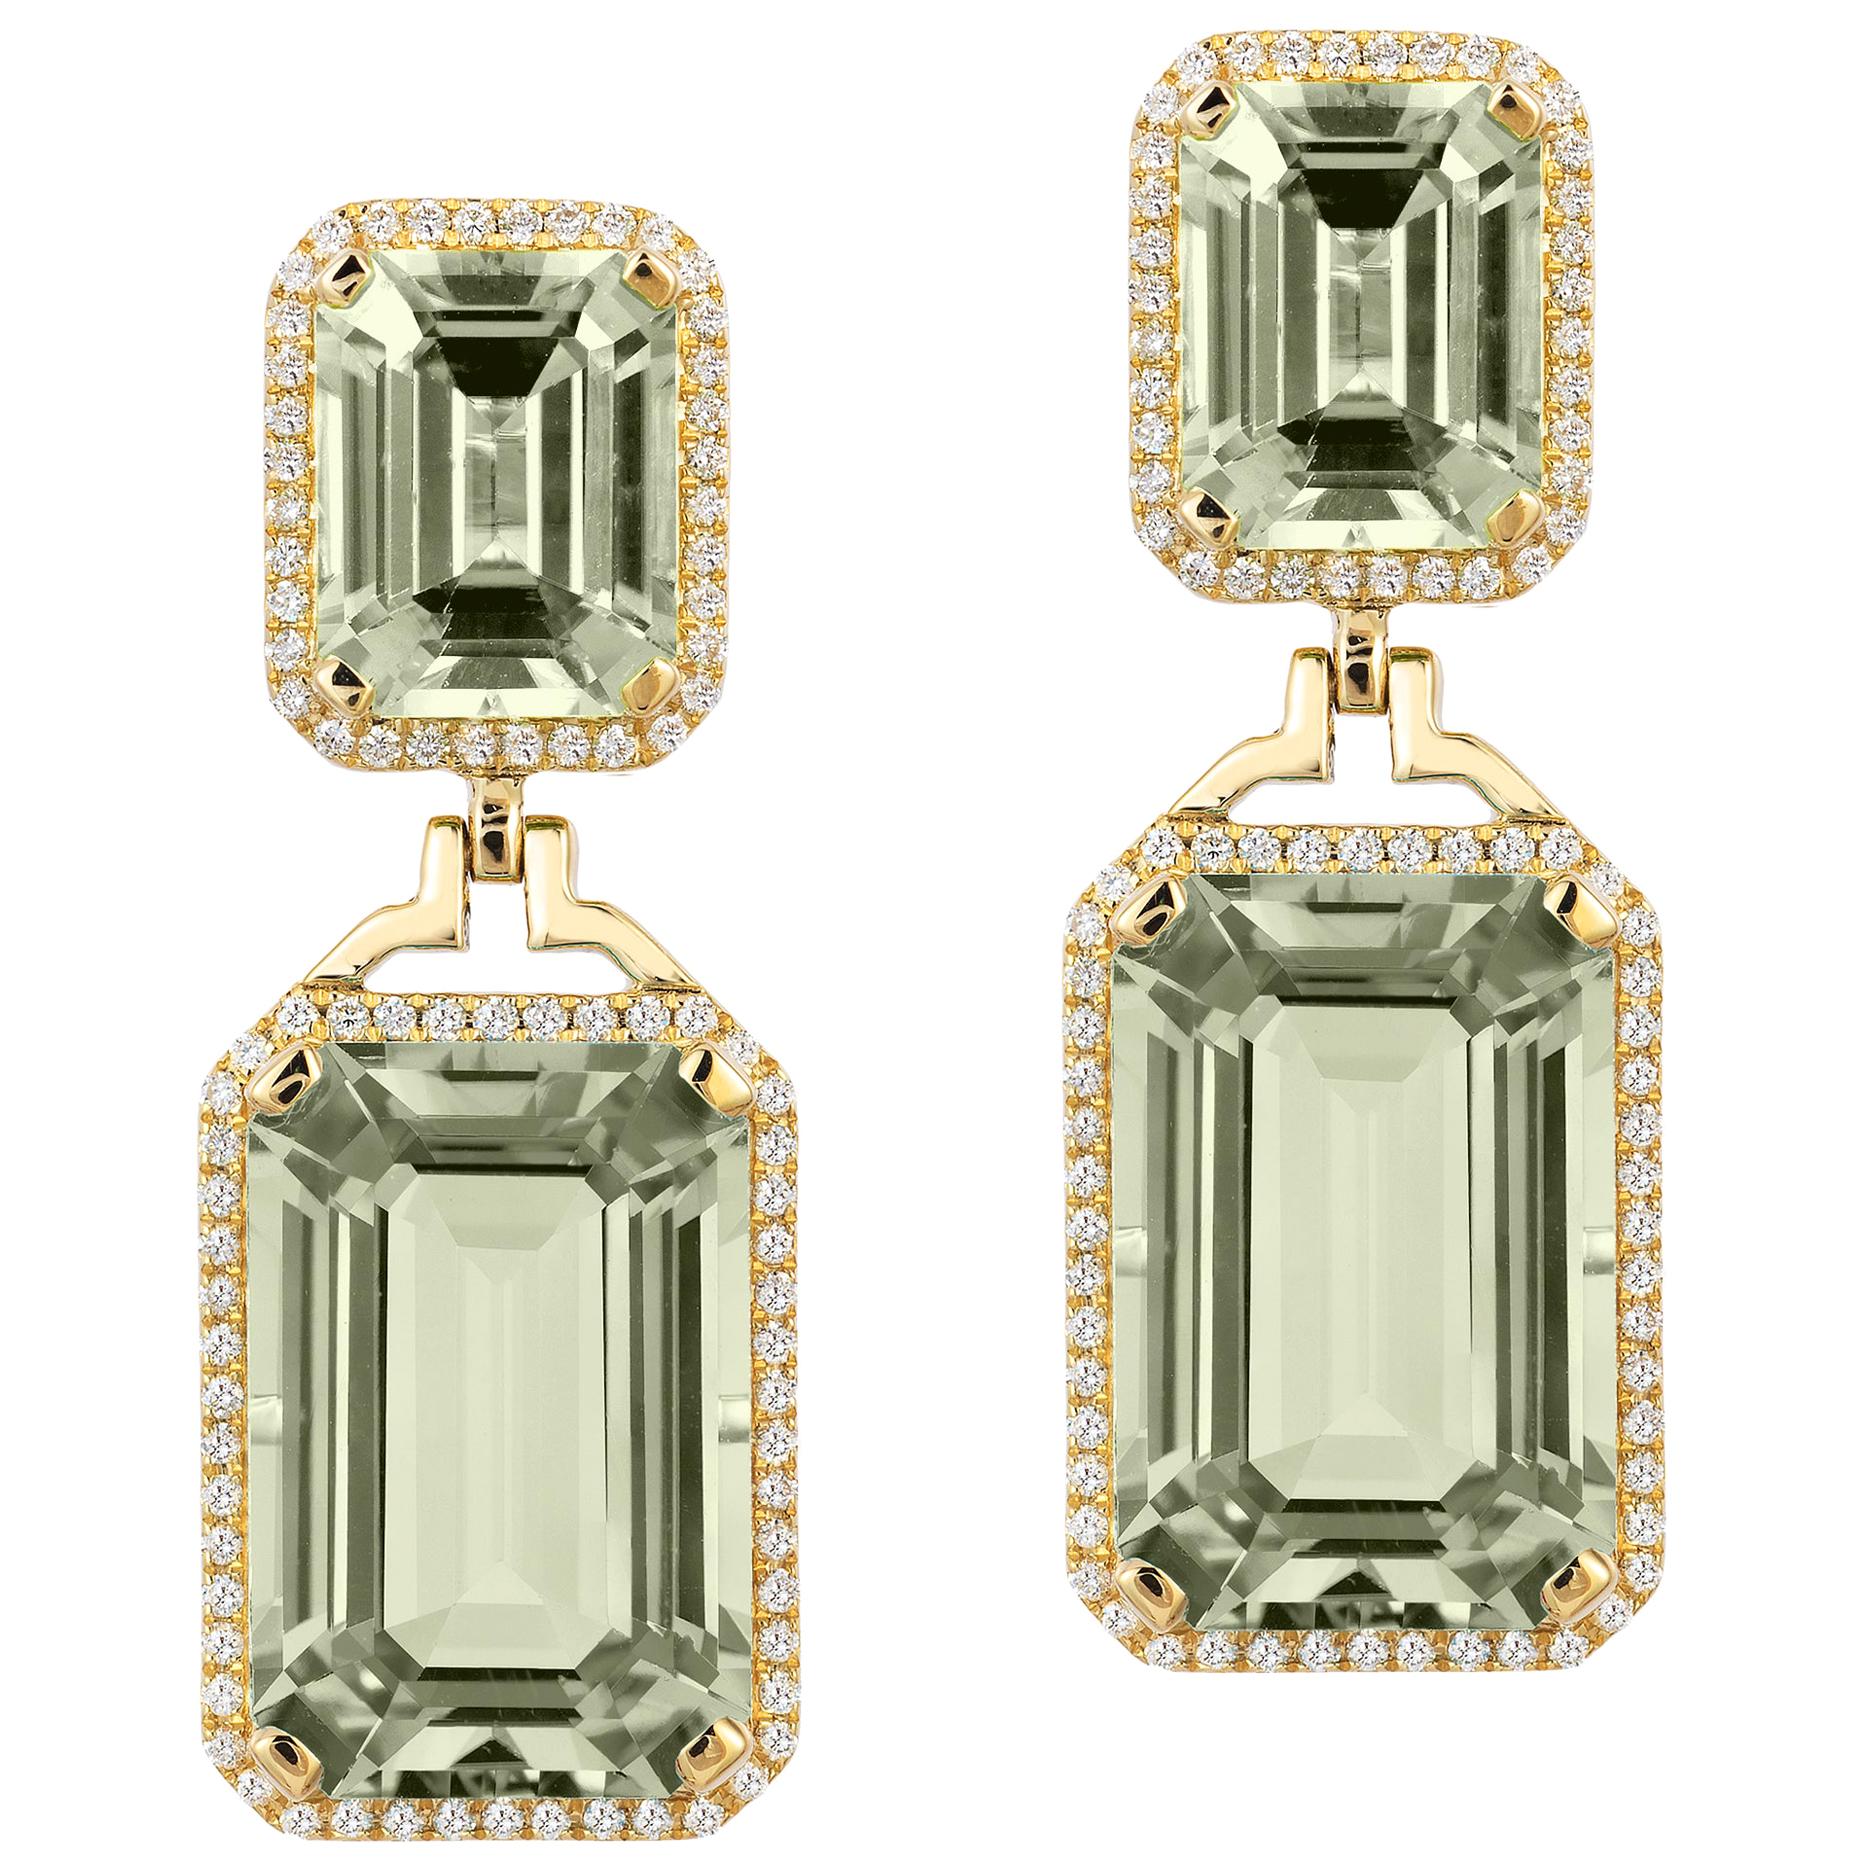 Goshwara Prasiolite Emerald Cut with Diamond Earrings